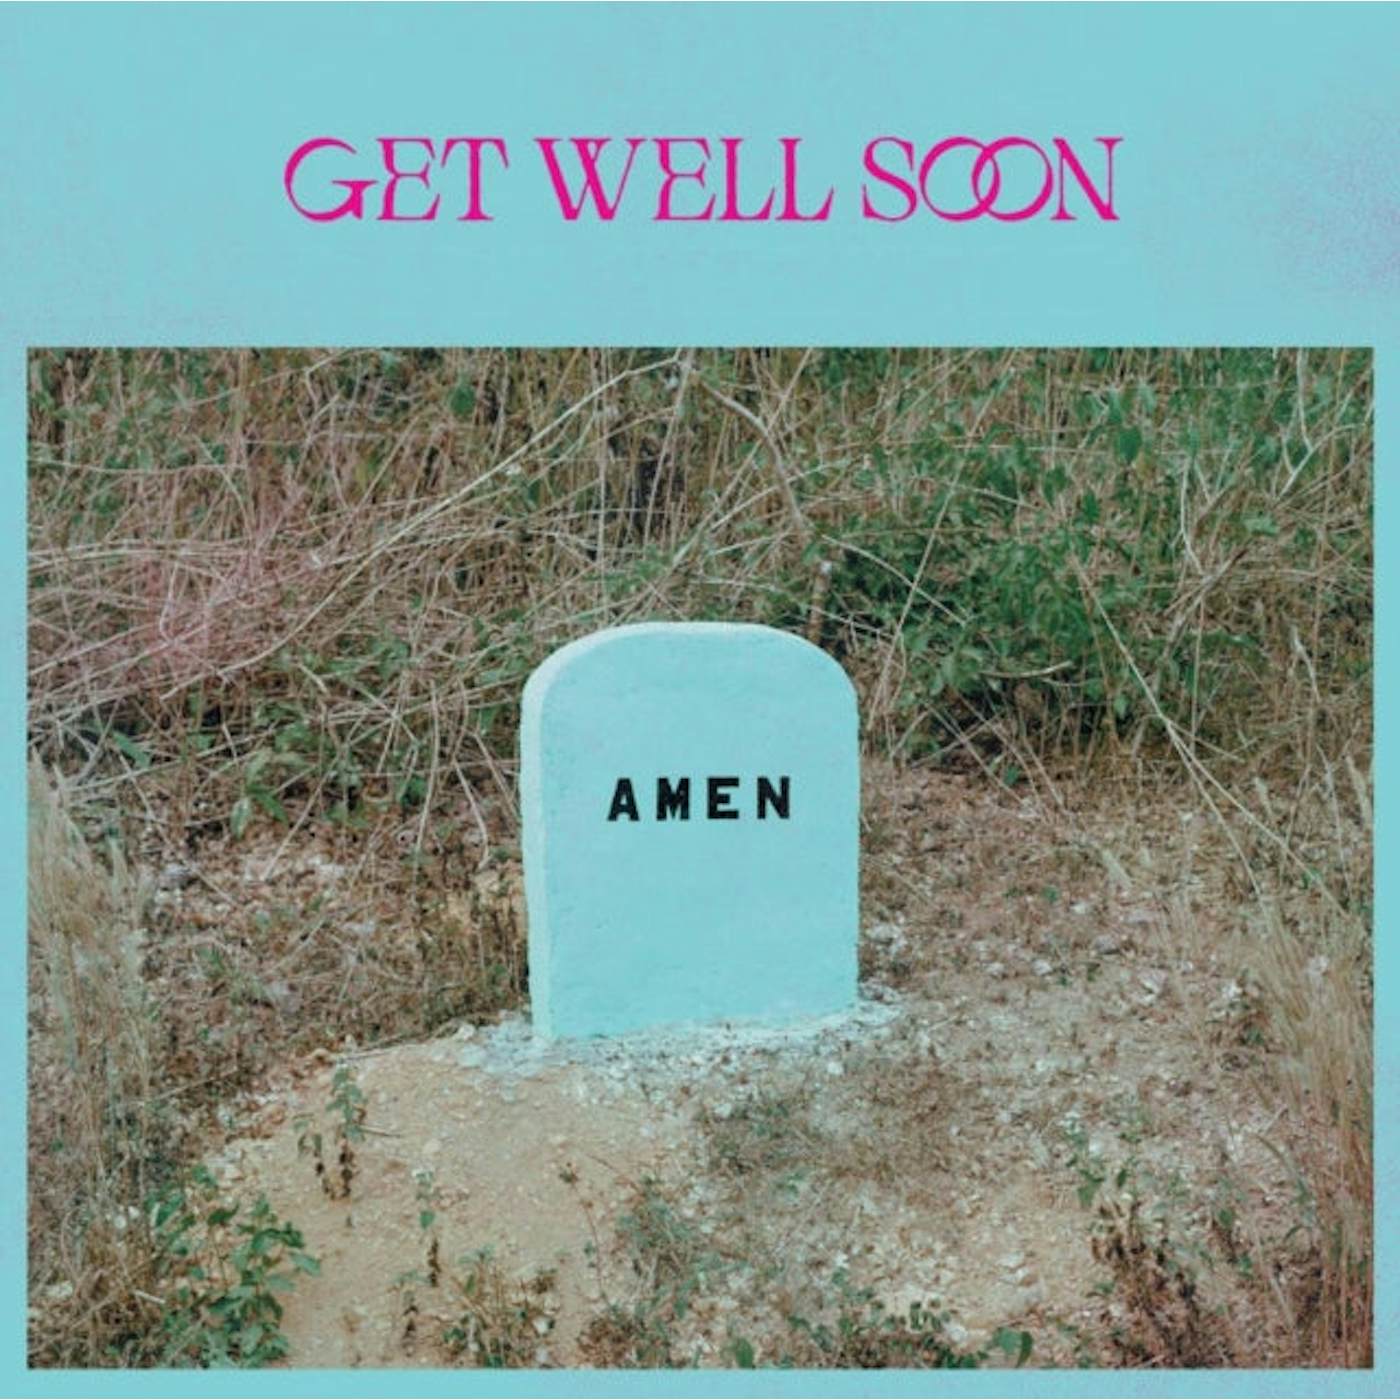 Get Well Soon LP Vinyl Record - Amen